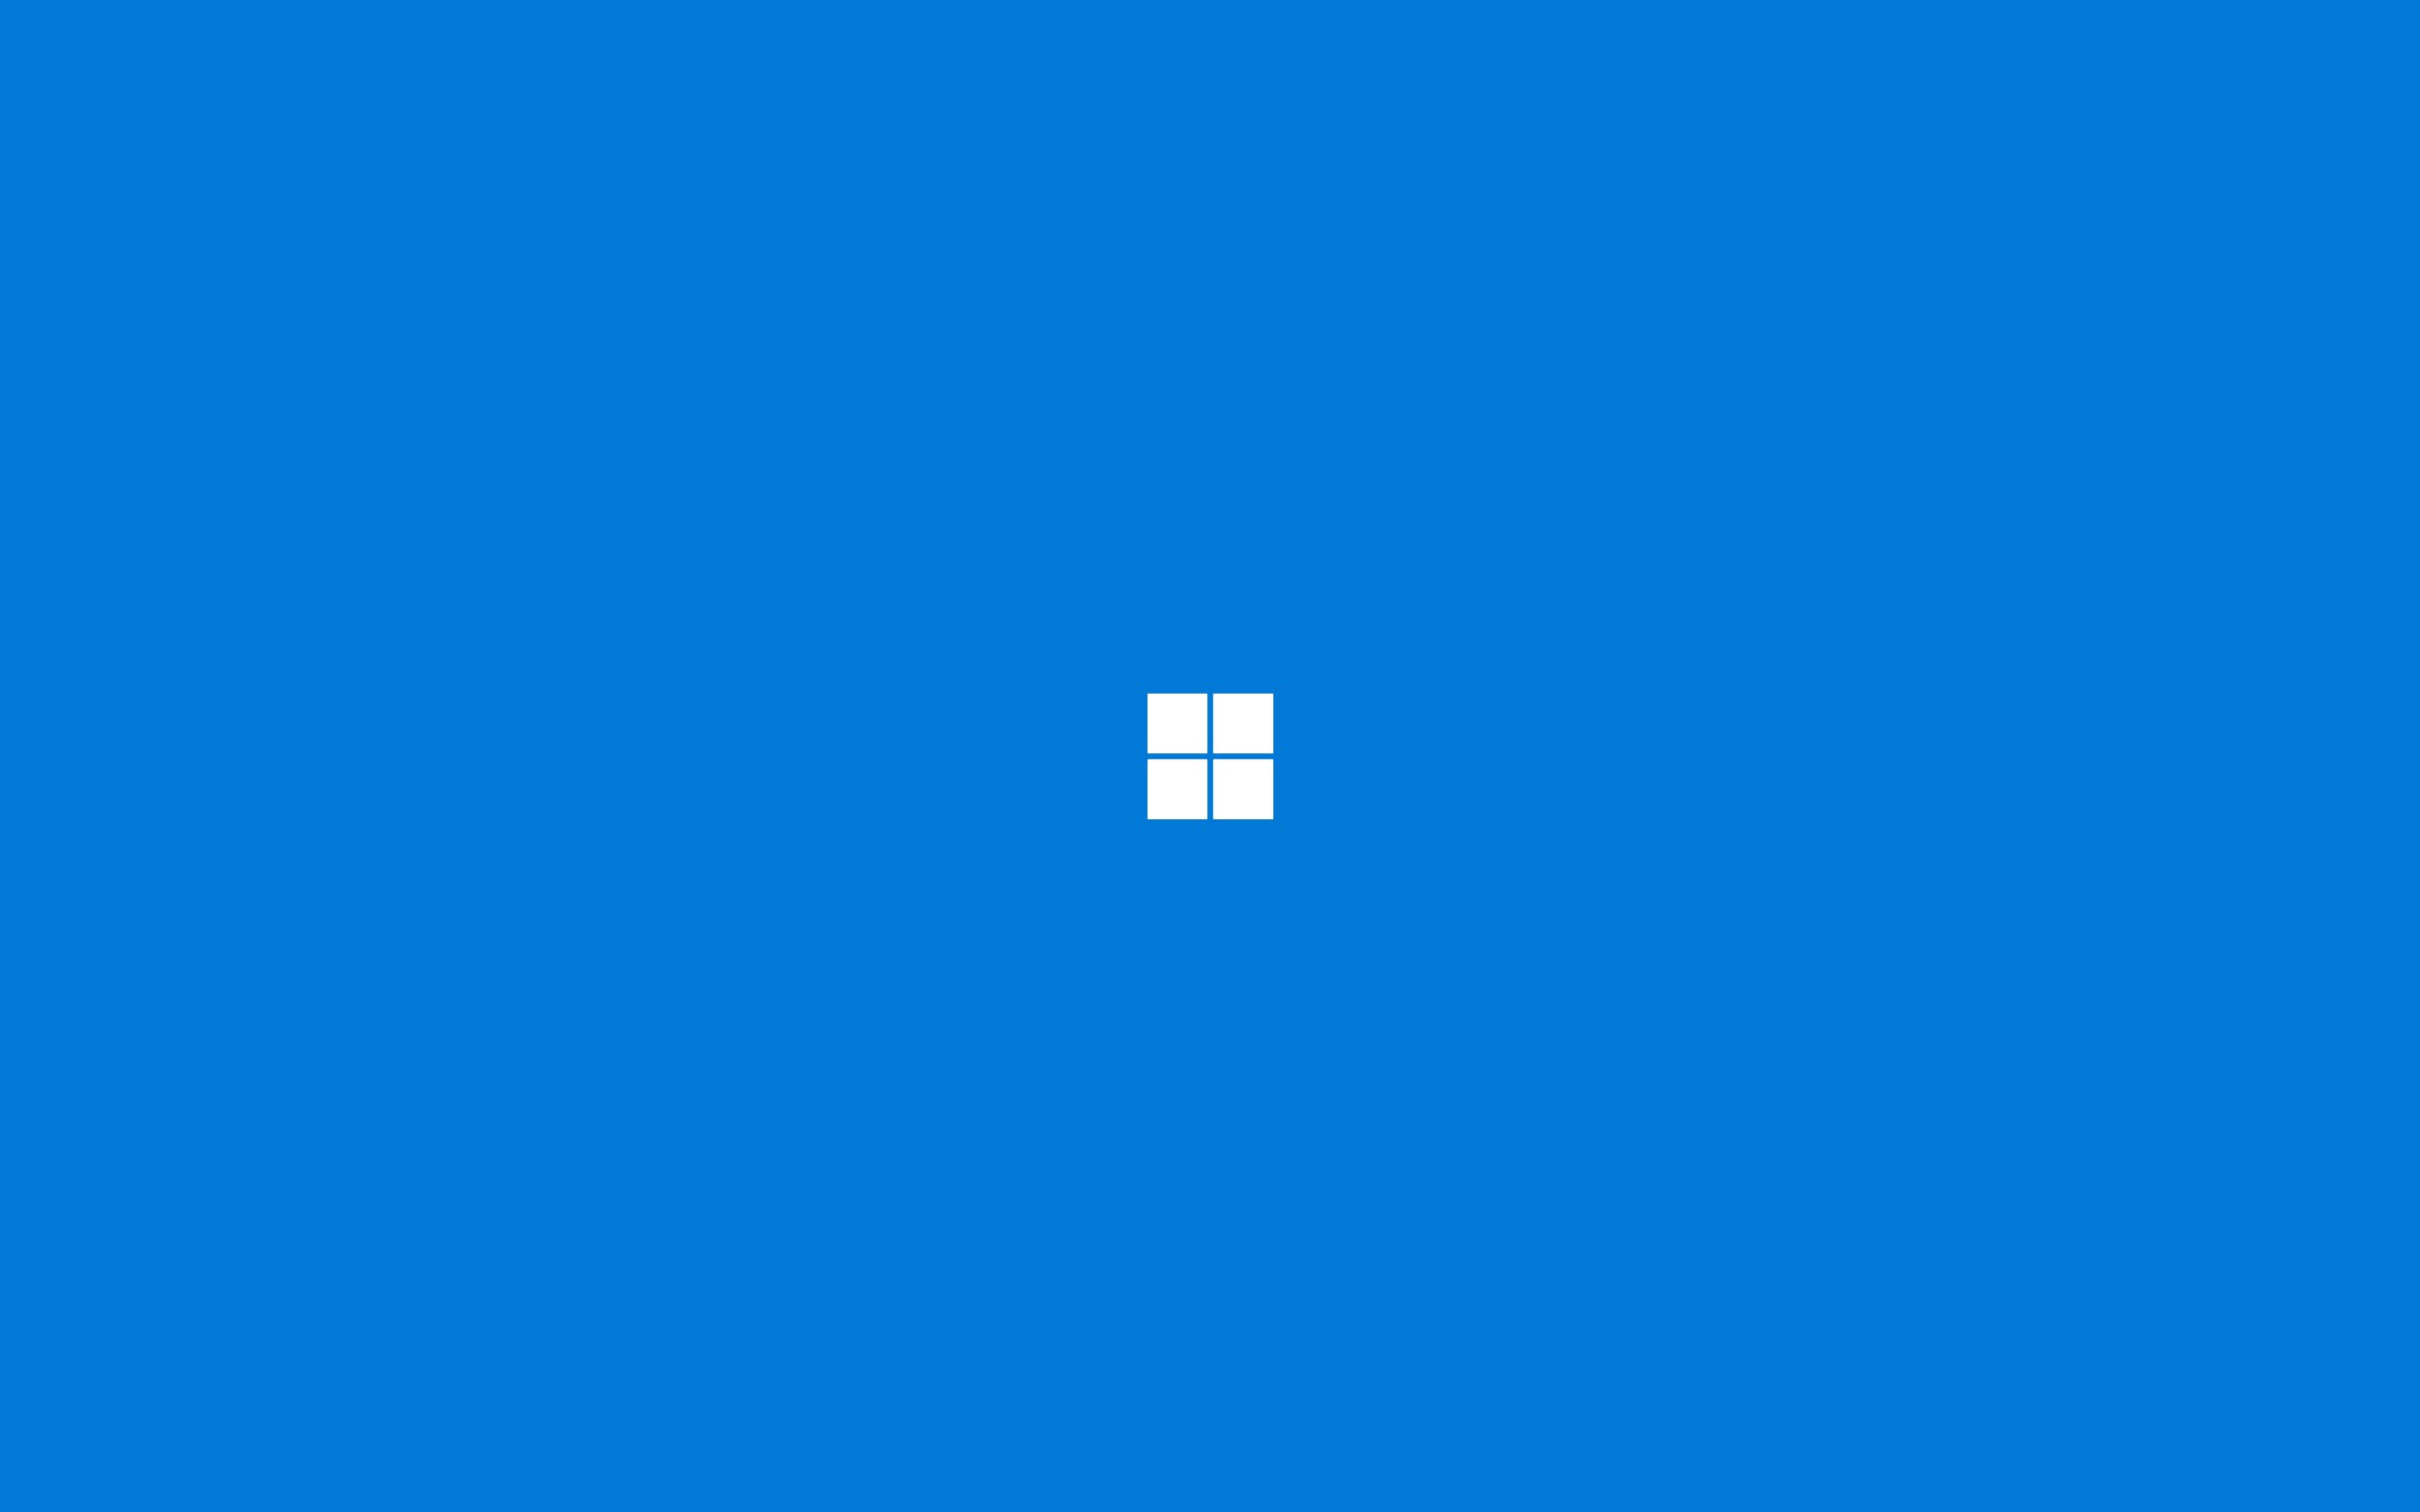 General 2560x1600 Windows 10 Microsoft Windows operating system minimalism logo simple background blue background